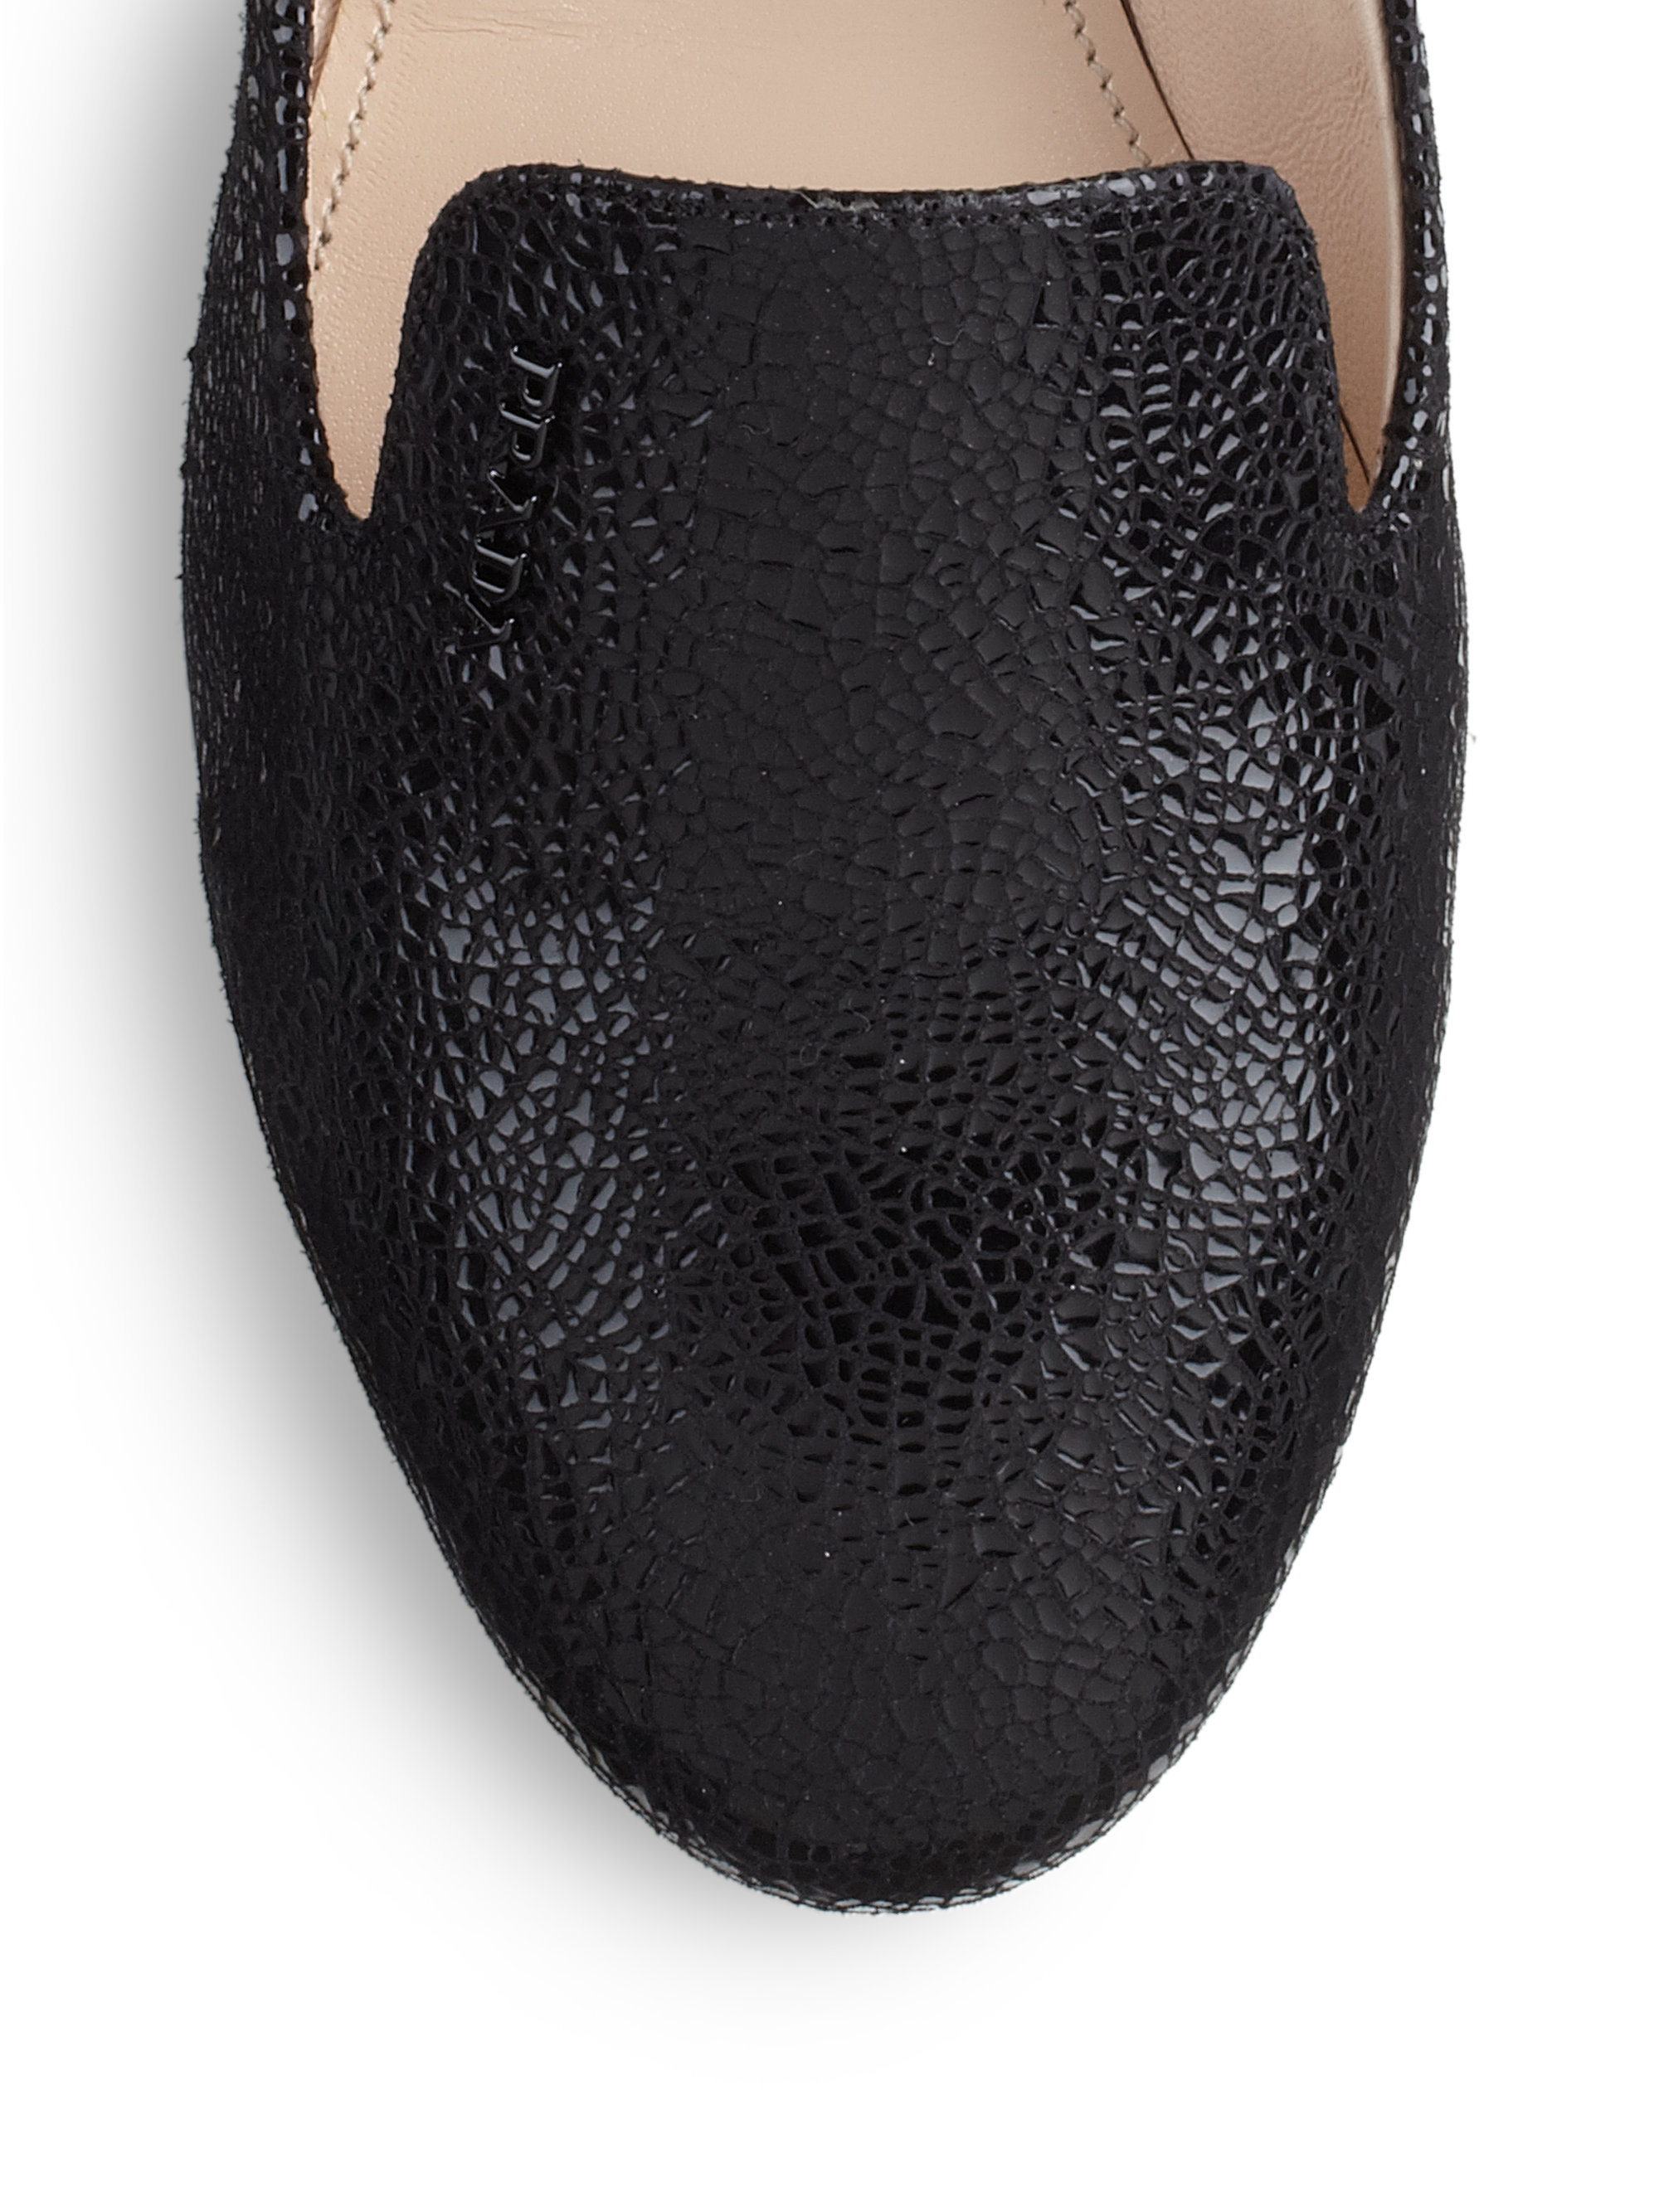 Prada Crackled Leather Smoking Slippers in Black (nero-black) | Lyst  